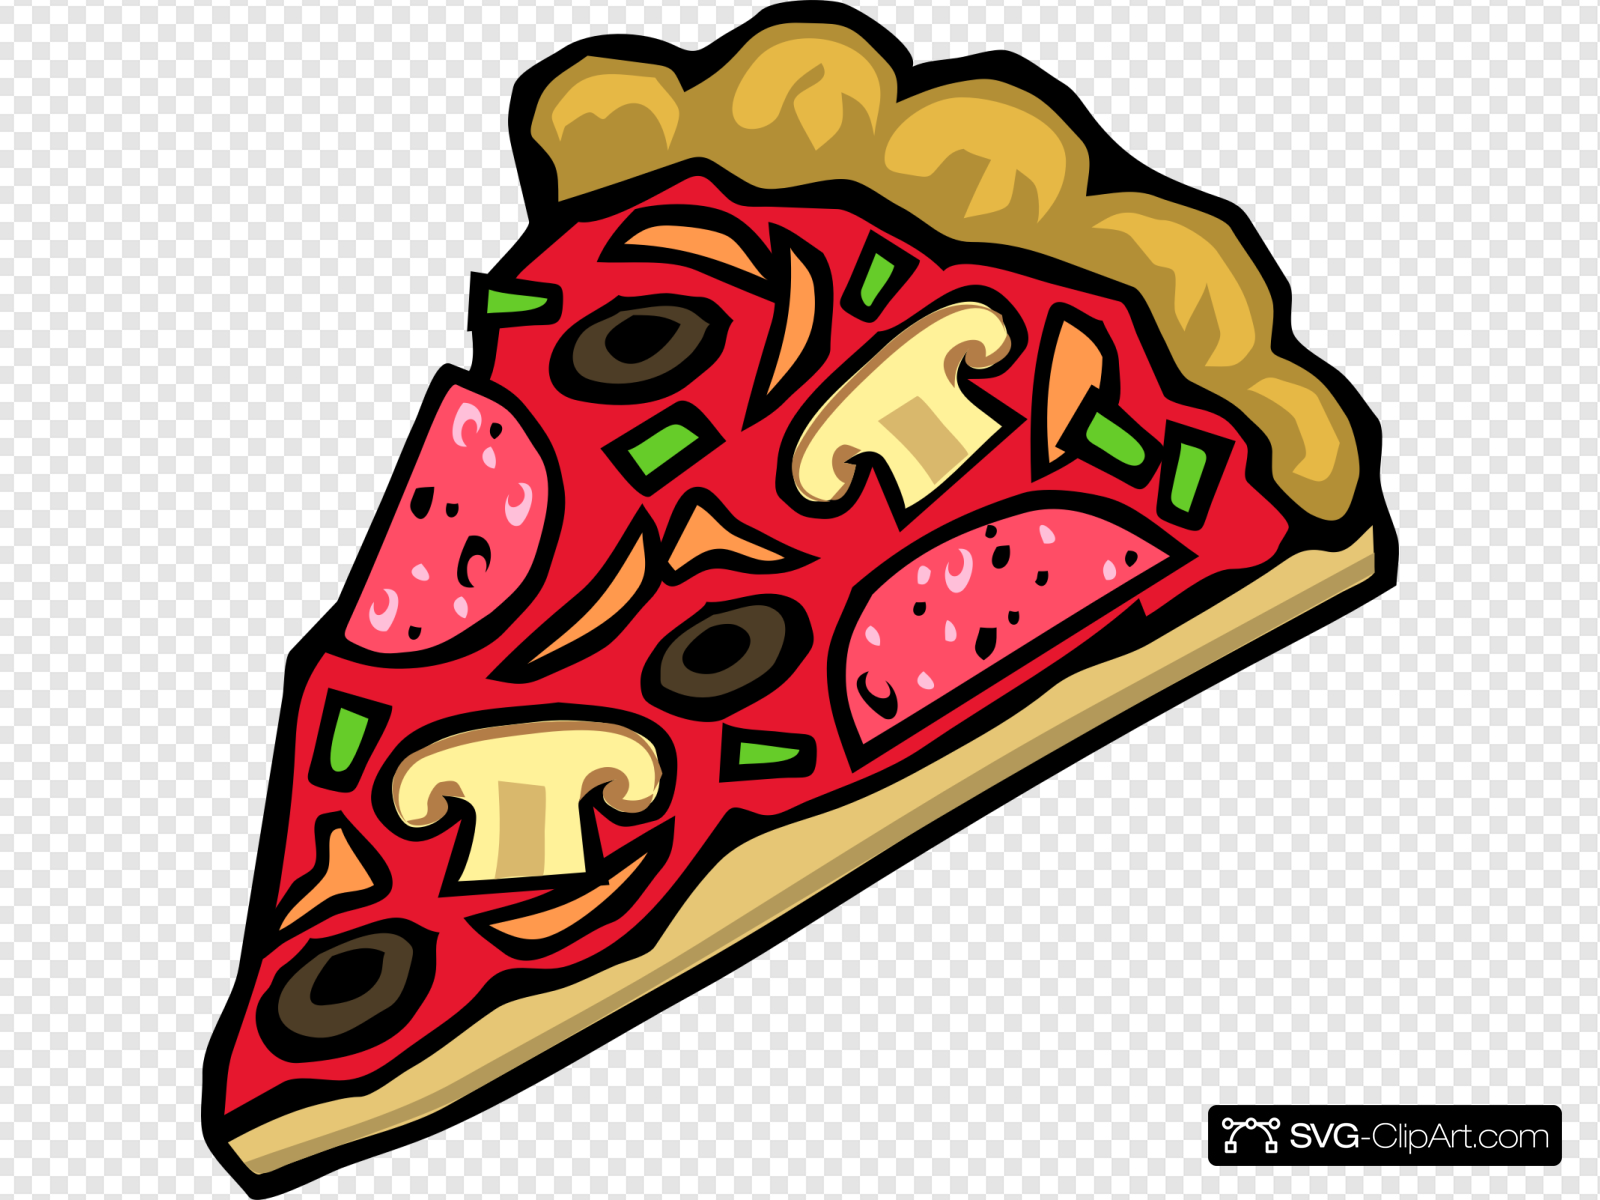 Pizza Slice Mushroom Veggies Pepperoni Clip art, Icon and